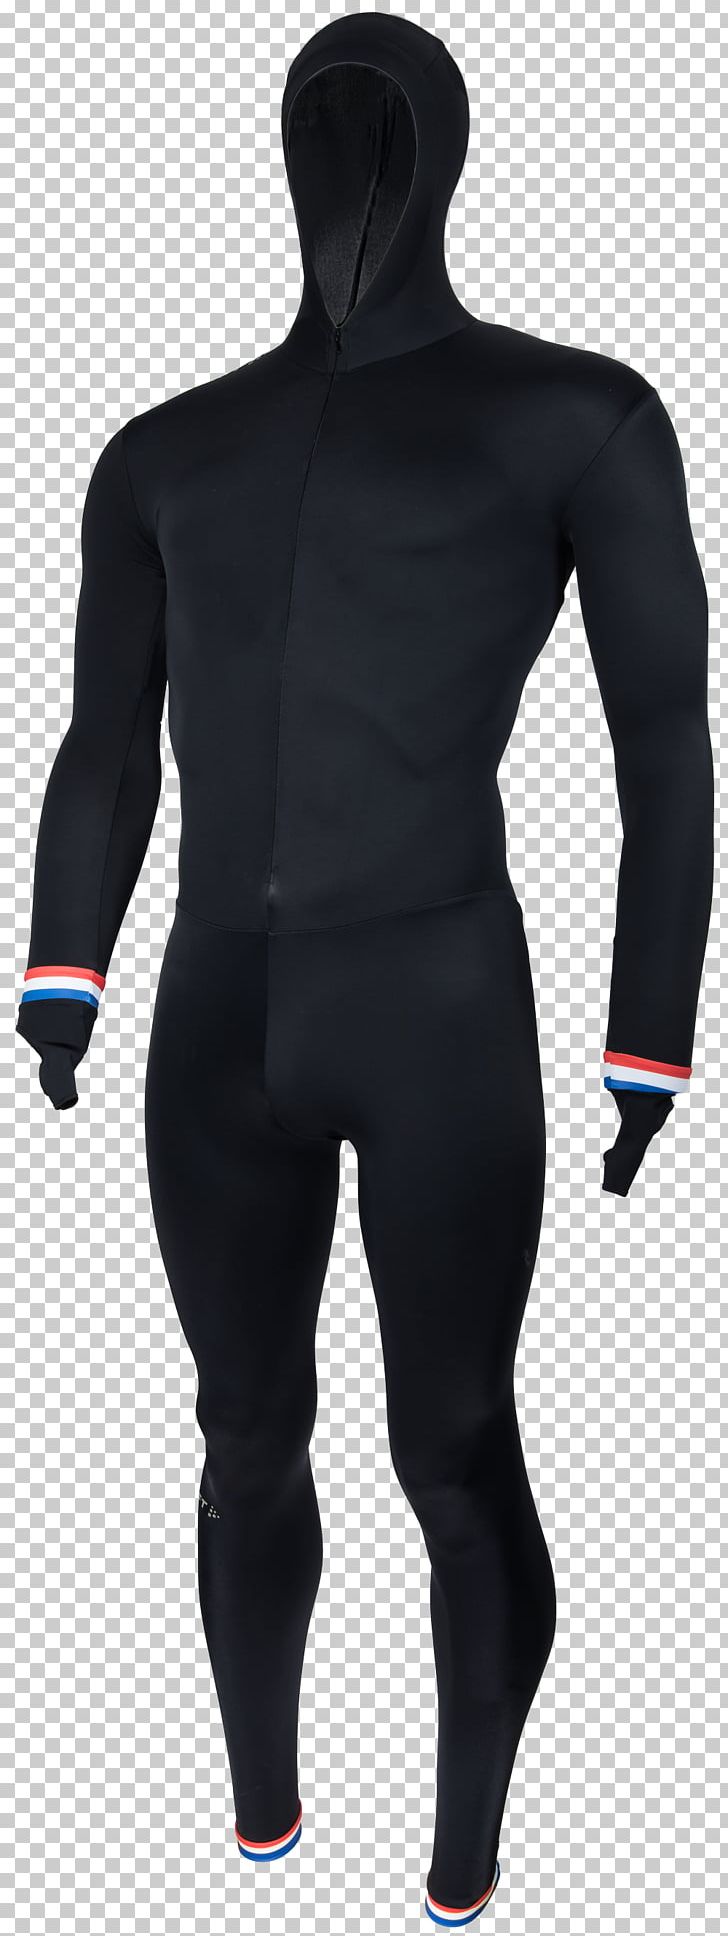 Zentai Bodysuit Spandex Unitard PNG, Clipart, Bag, Black, Bodysuit, Catsuit, Clothing Free PNG Download